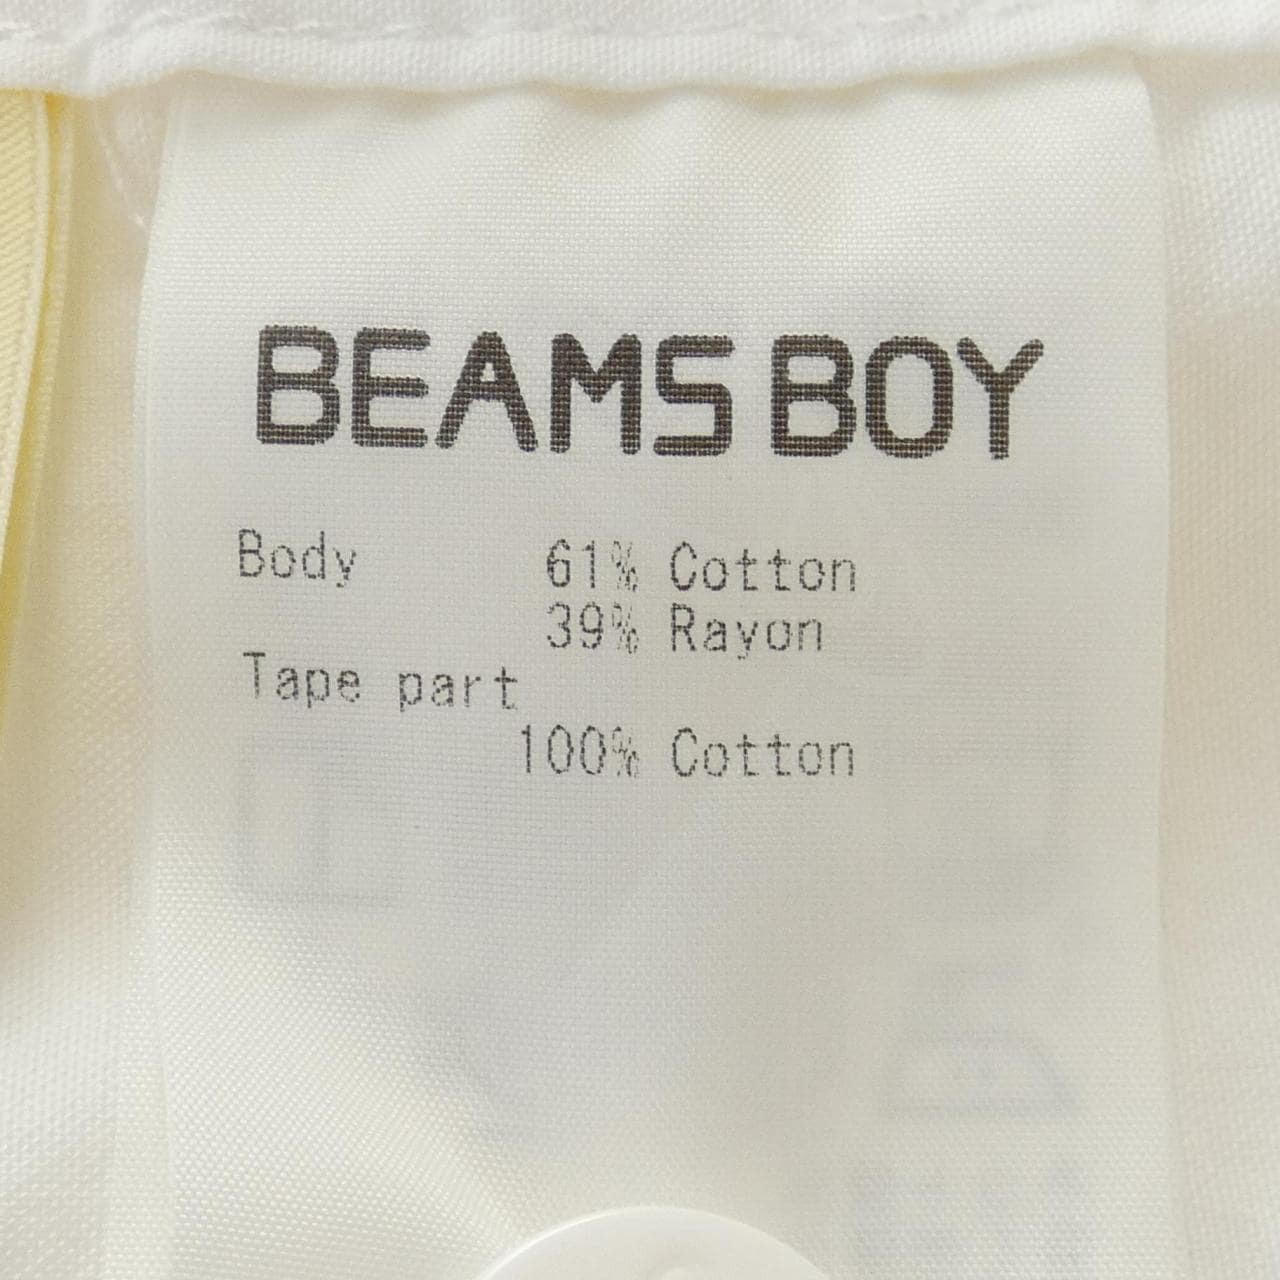 BEAMS BOY襯衫